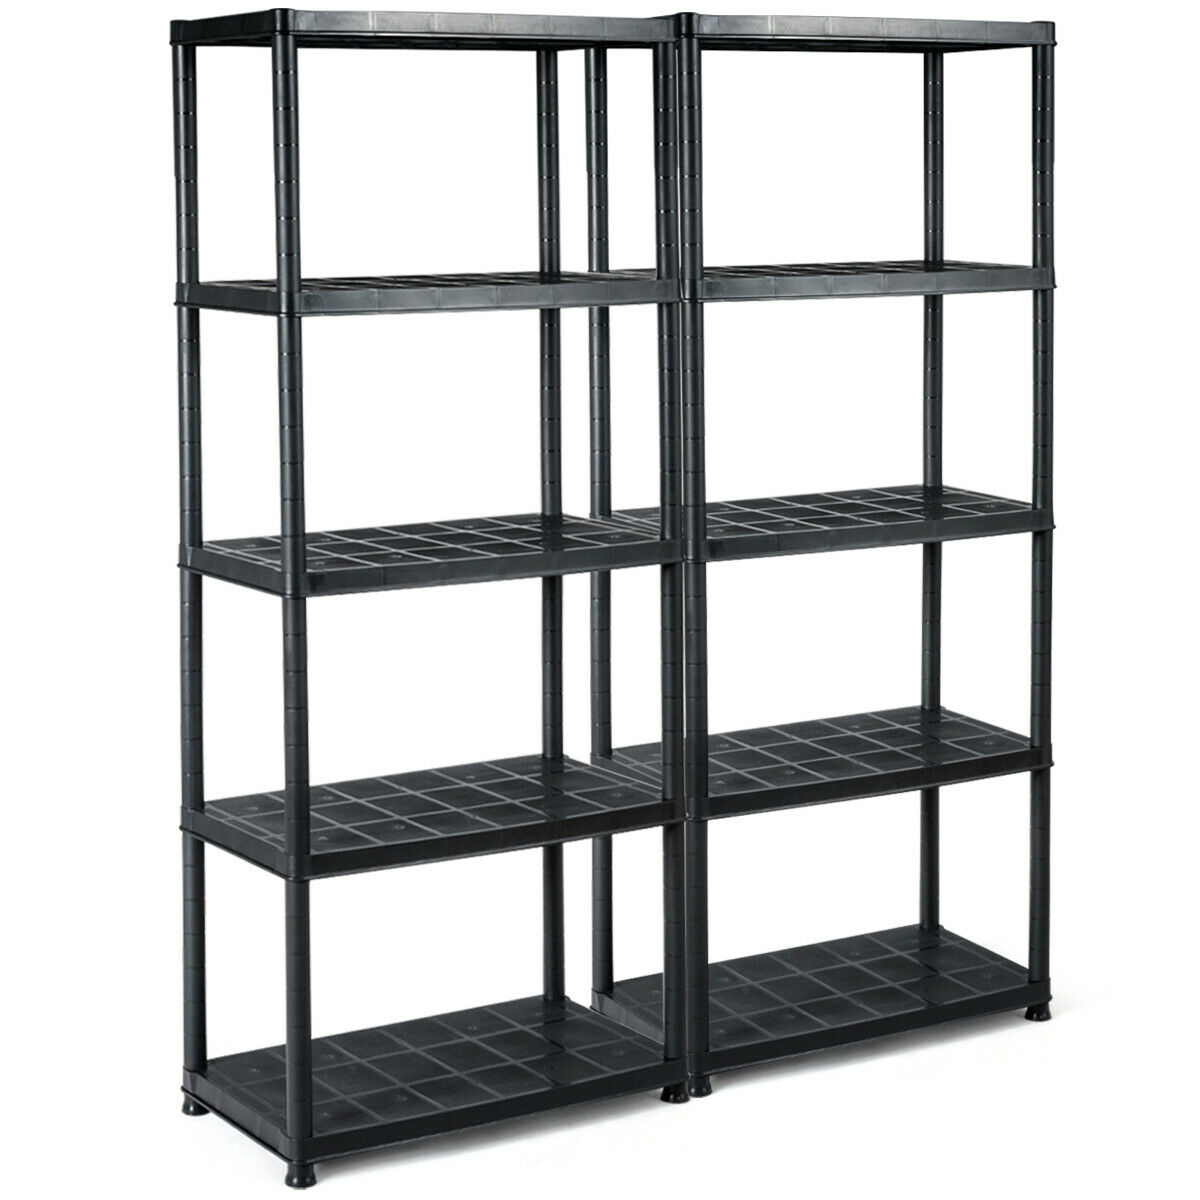 2 Pieces 5-Tier Ventilated Shelving Storage Rack Free Standing Multi-Use Shelf Unit